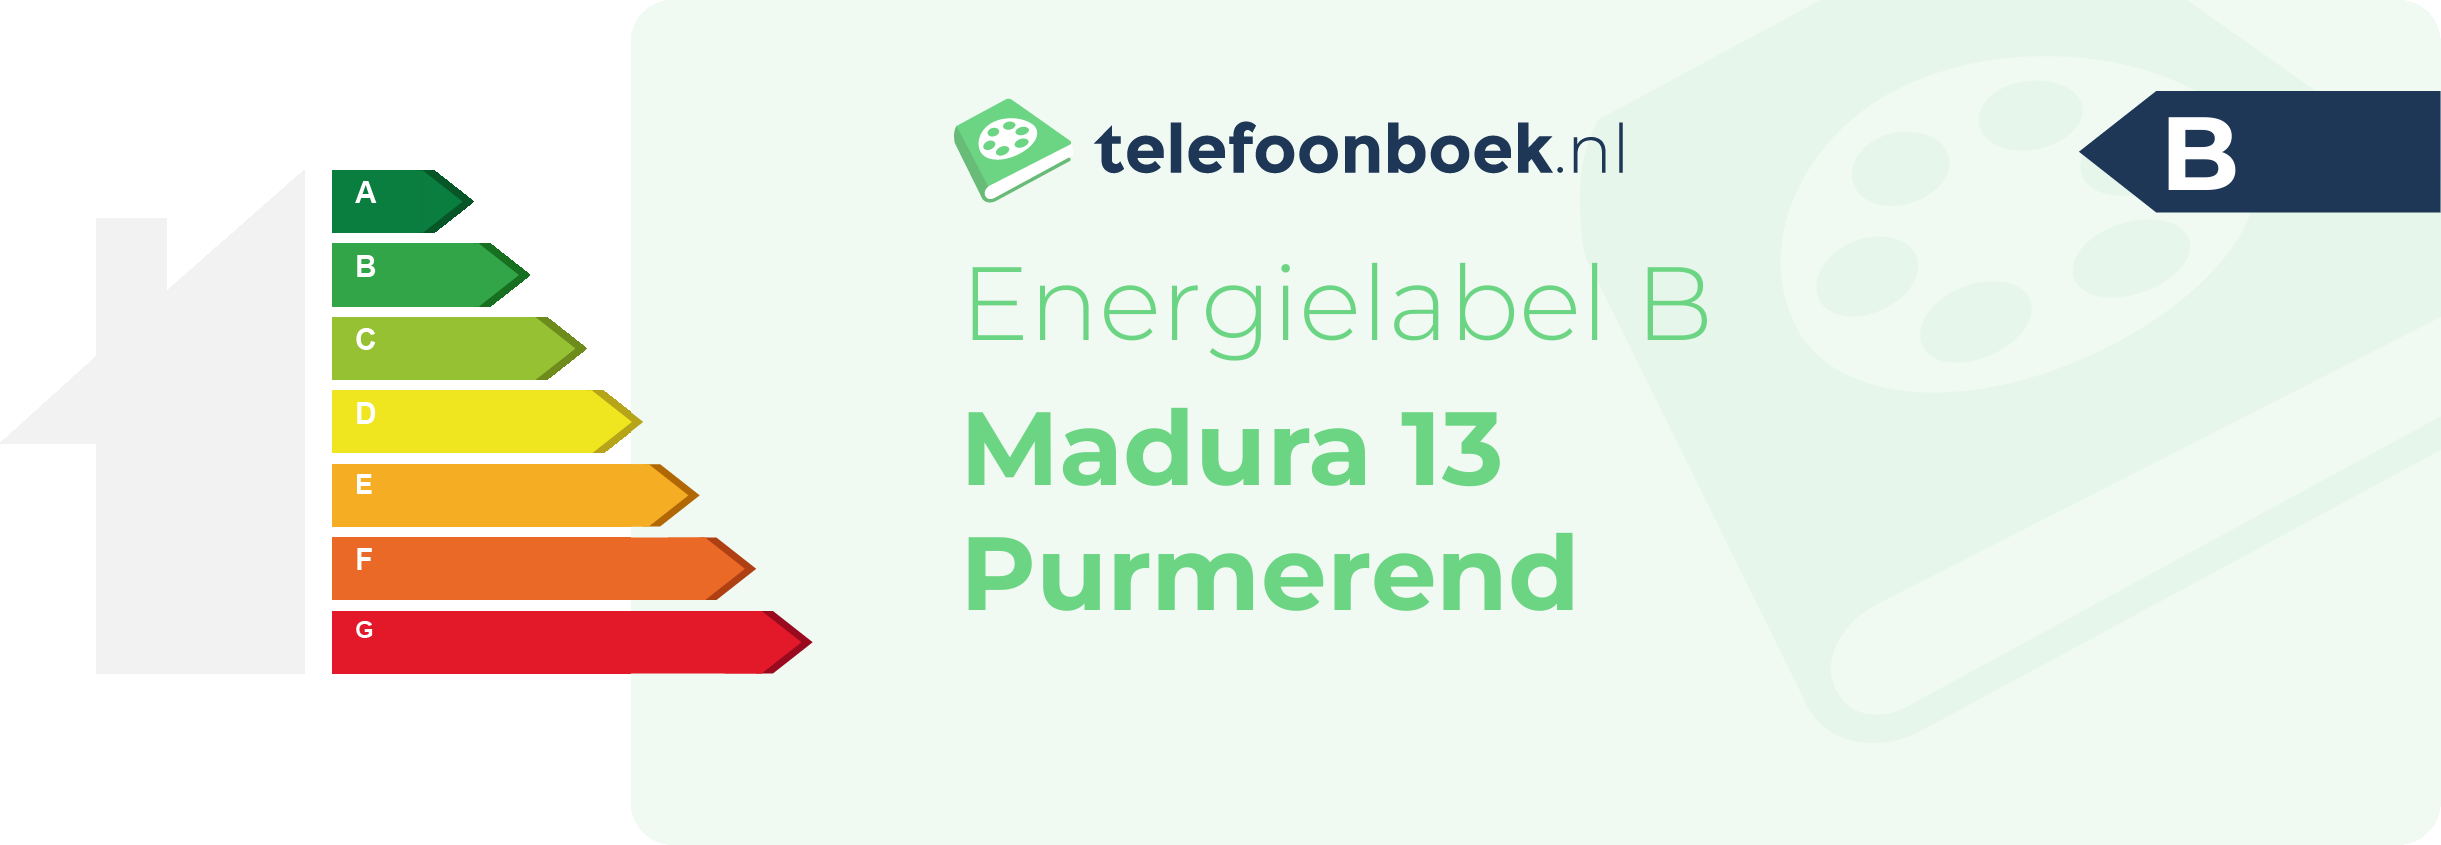 Energielabel Madura 13 Purmerend